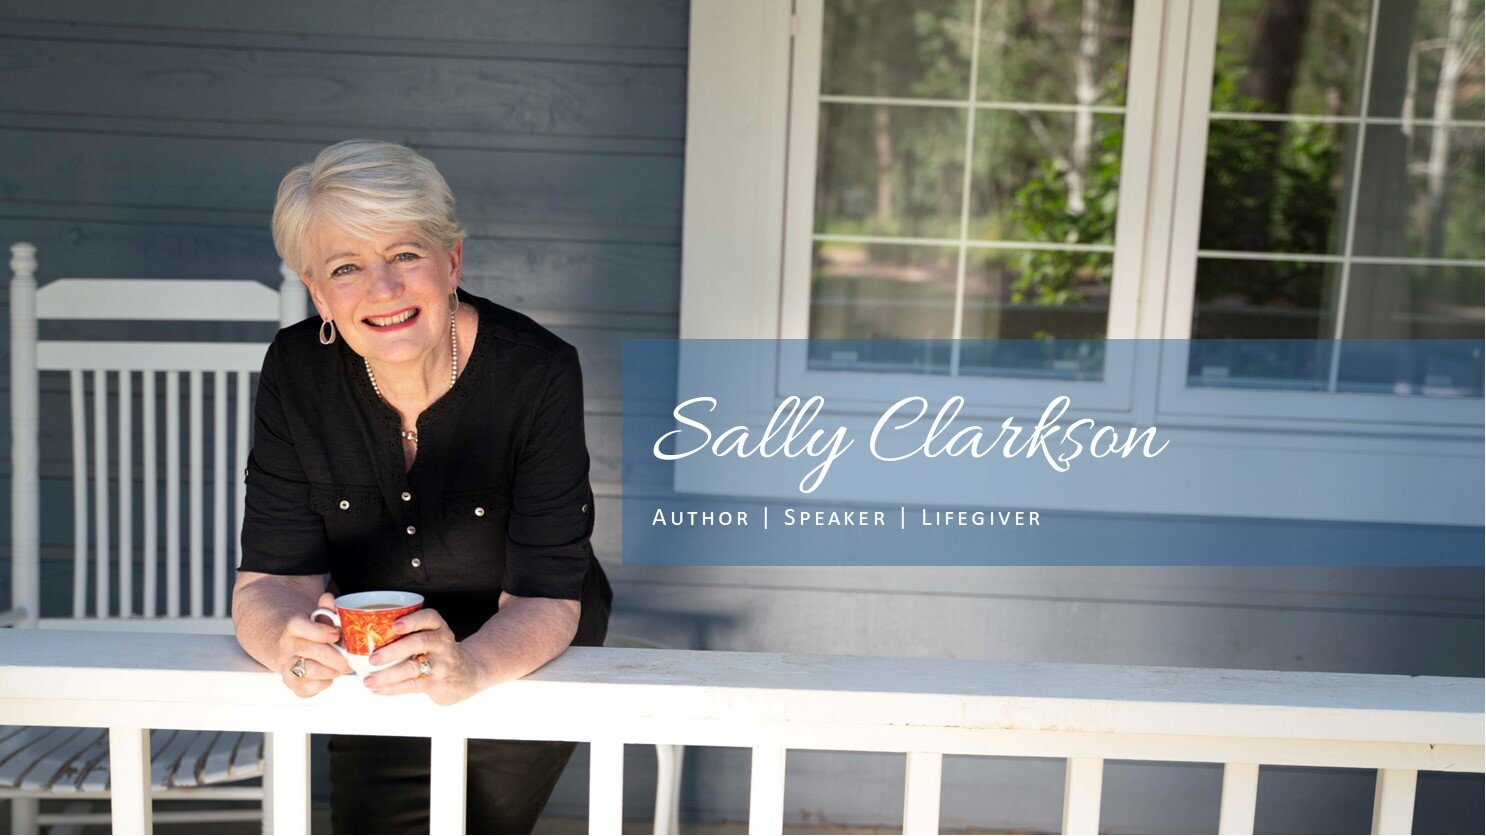 SallyClarkson.com